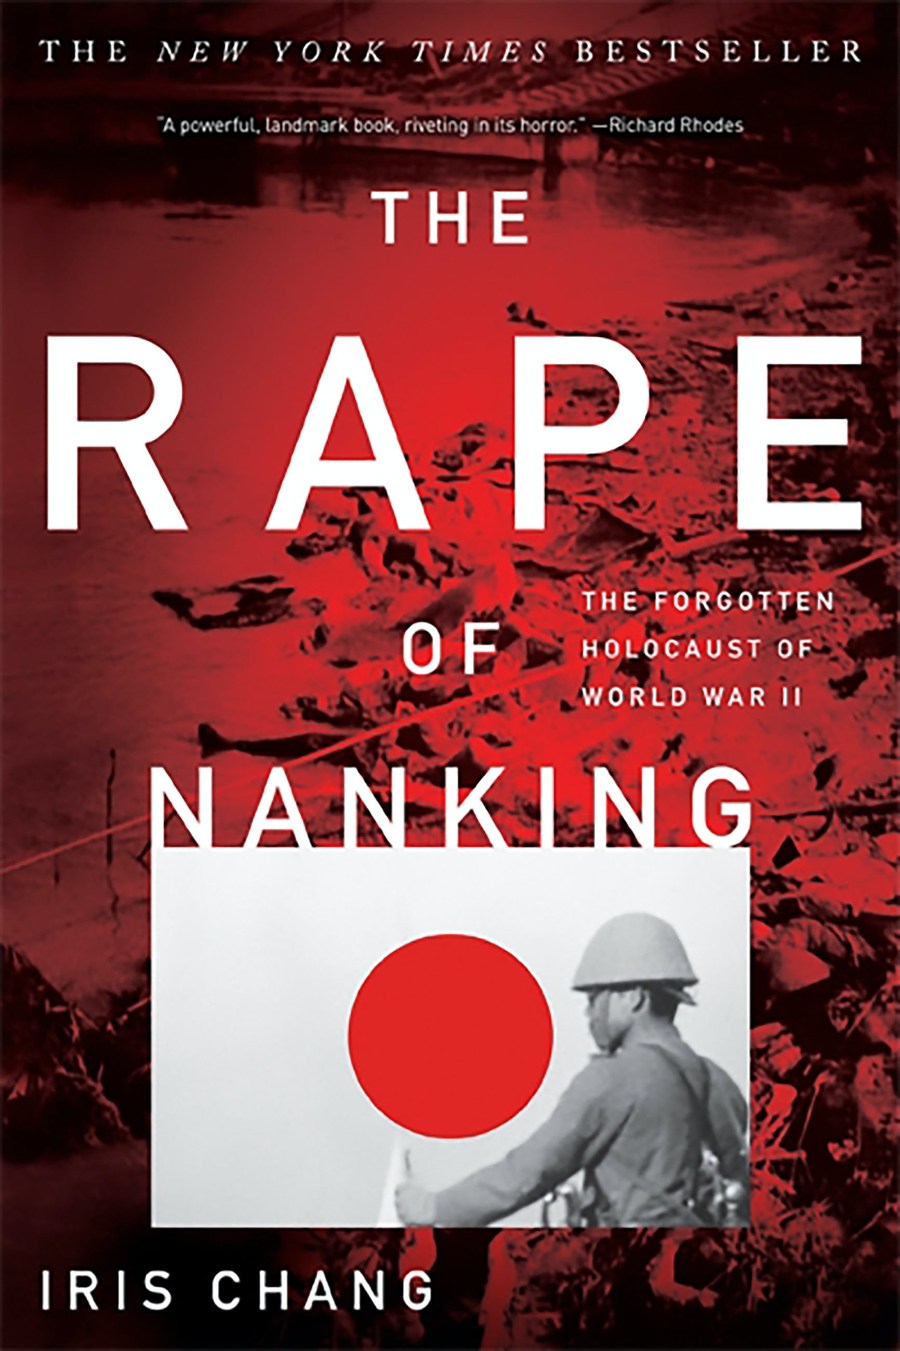 the rape of nanking non-fiction book